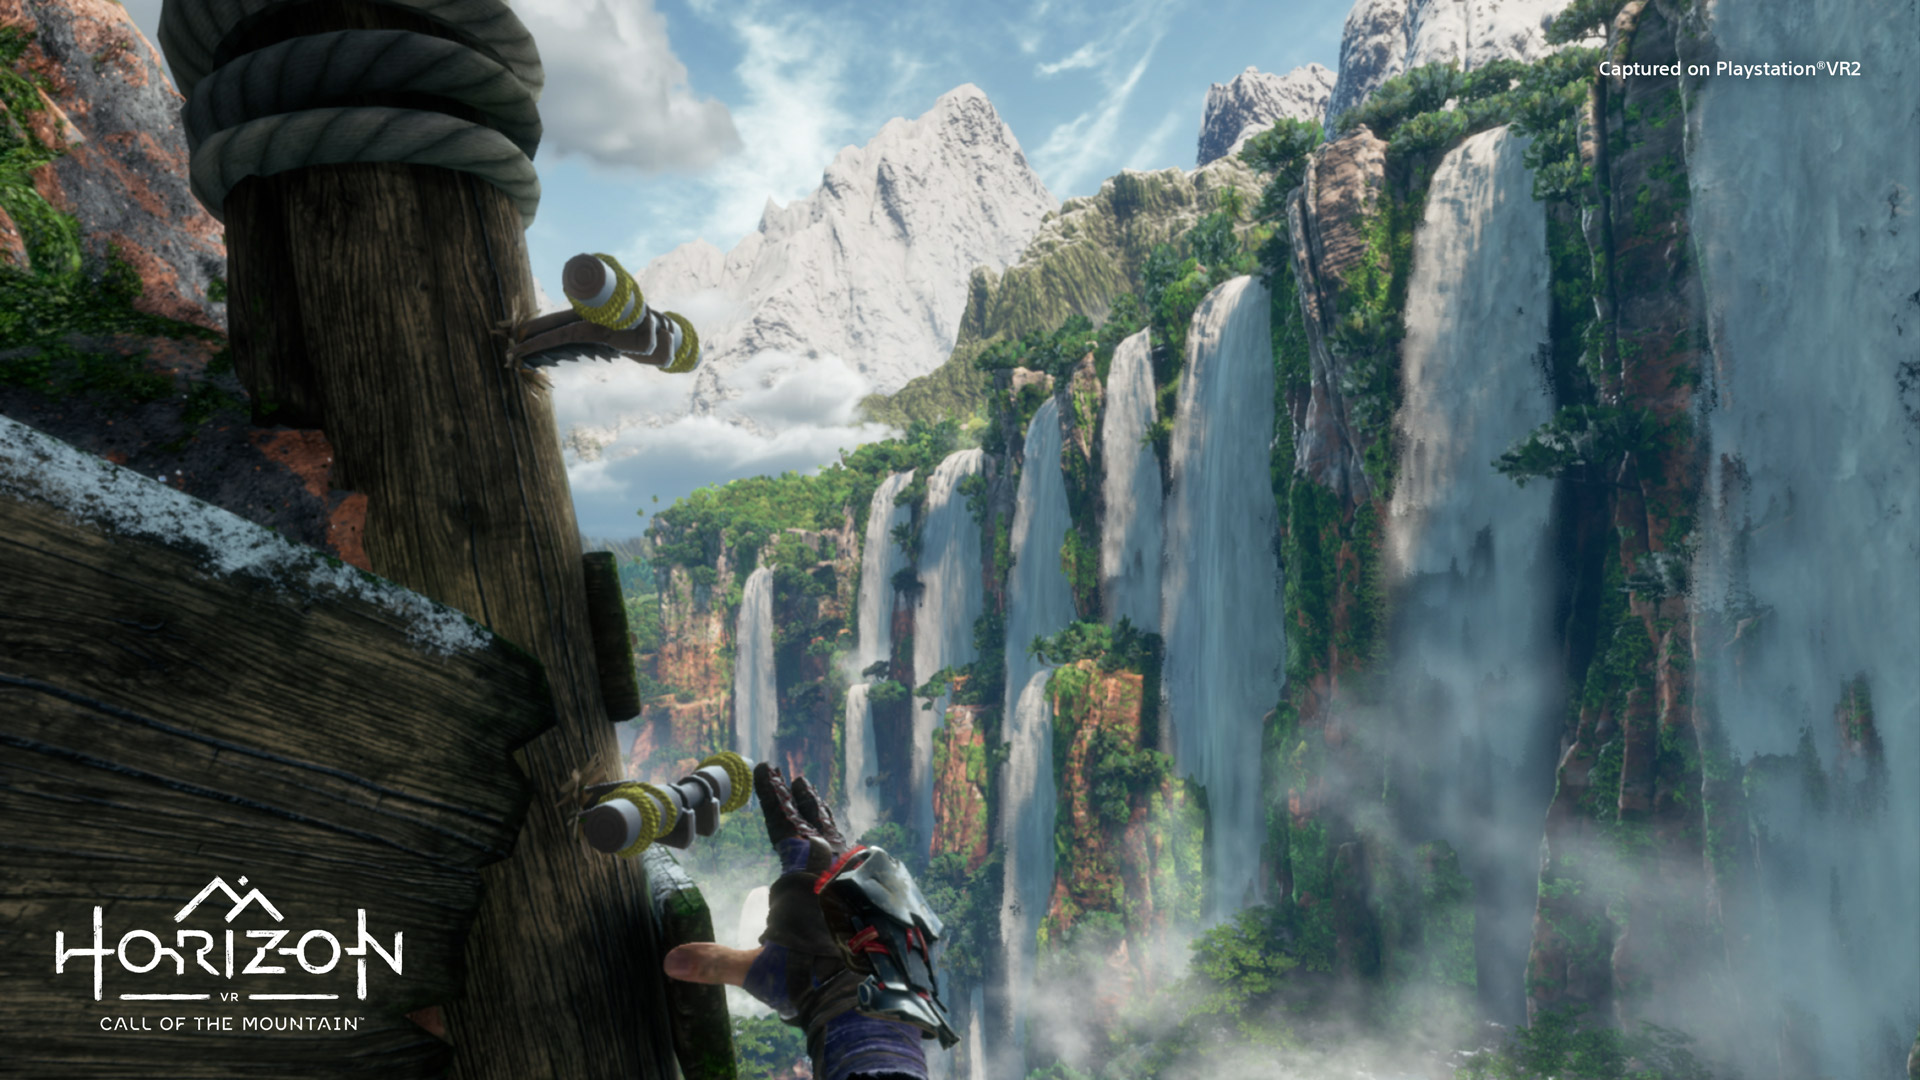 Horizon Call of the Mountain Review on PSVR 2 – VR Climbing Taken